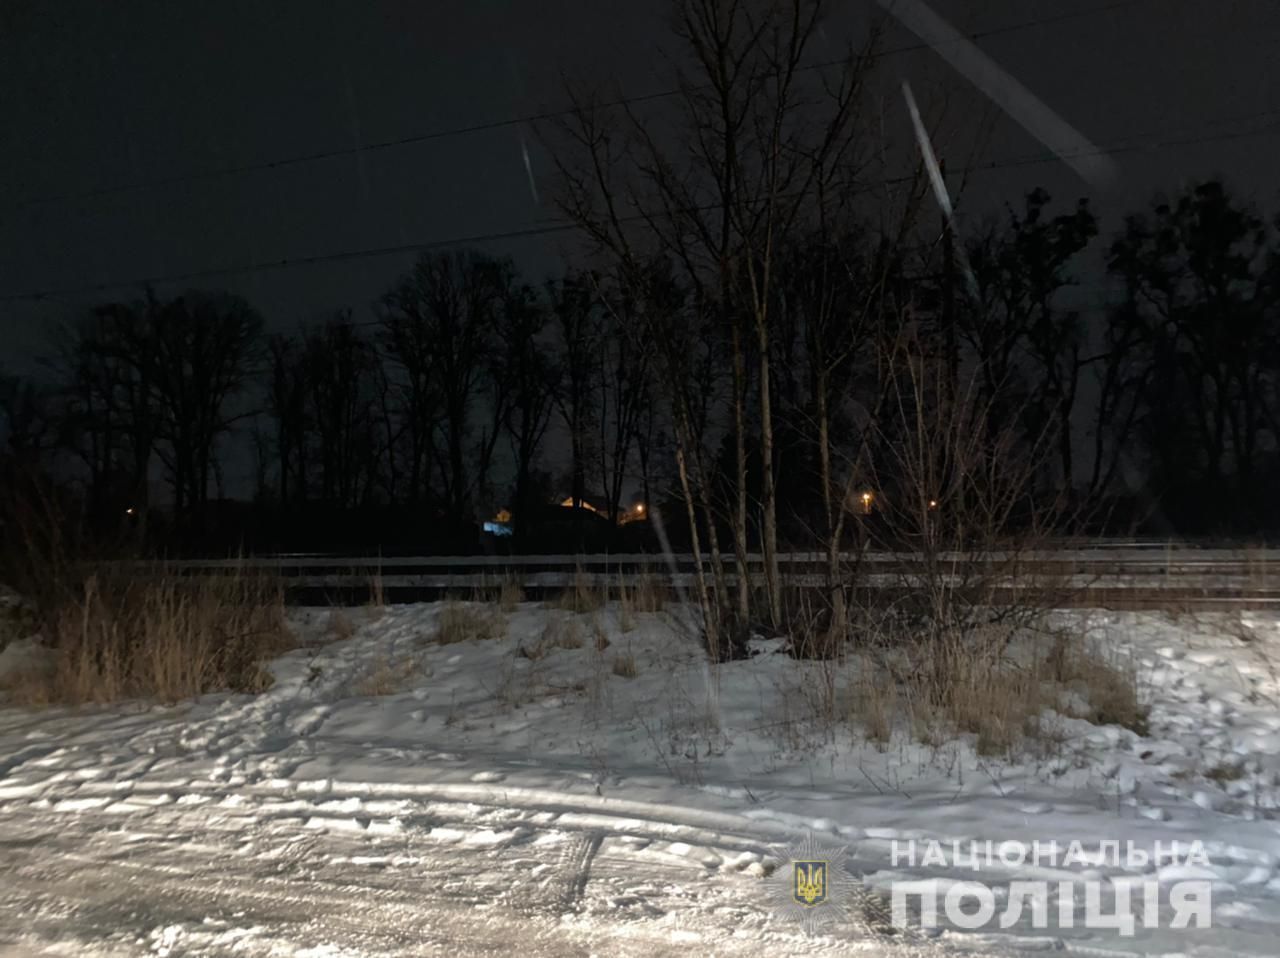 Хотел яркое фото: на Киевщине мужчина едва не погиб на железной дороге